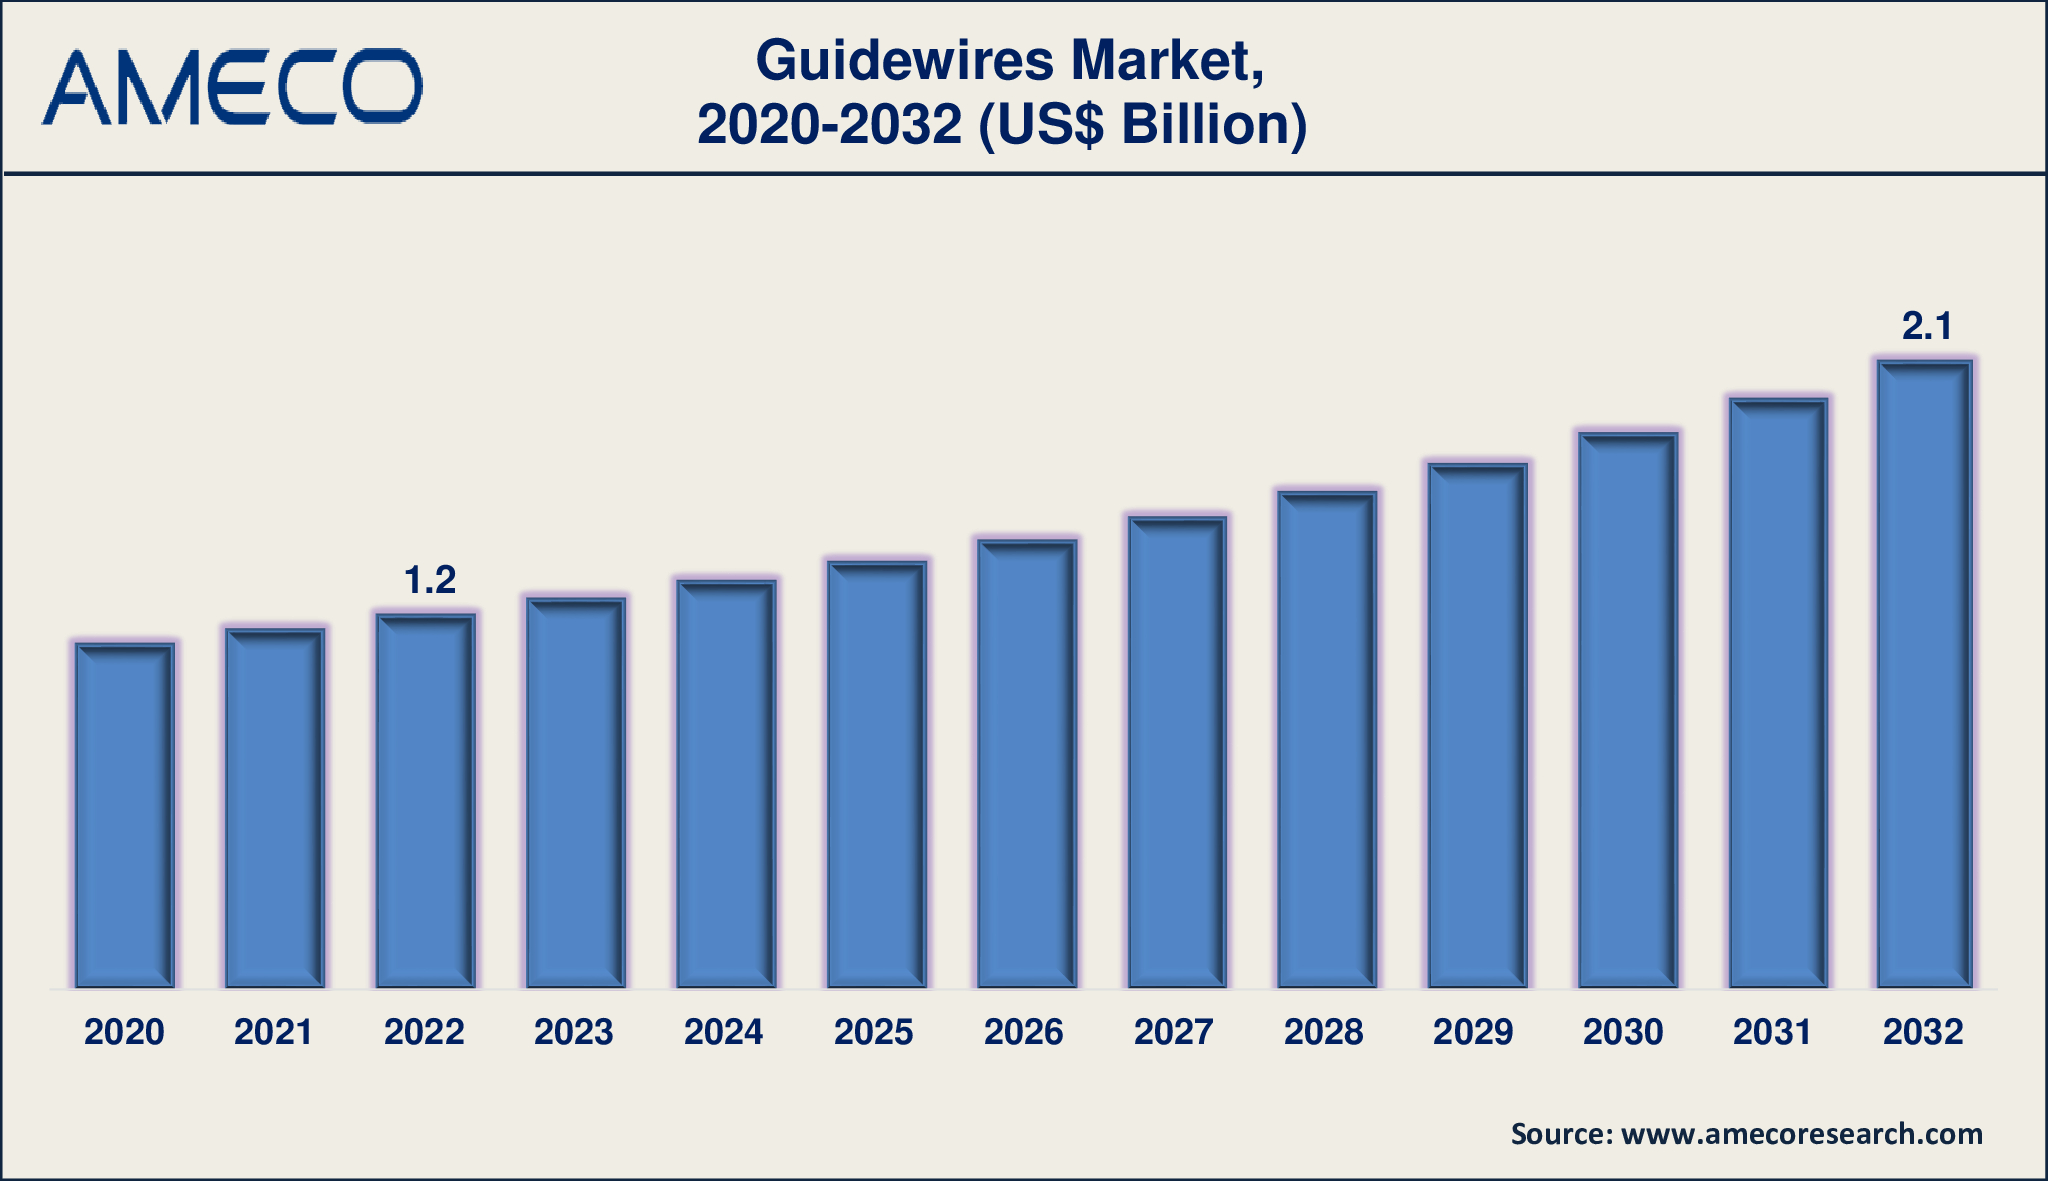 Guidewires Market Insights